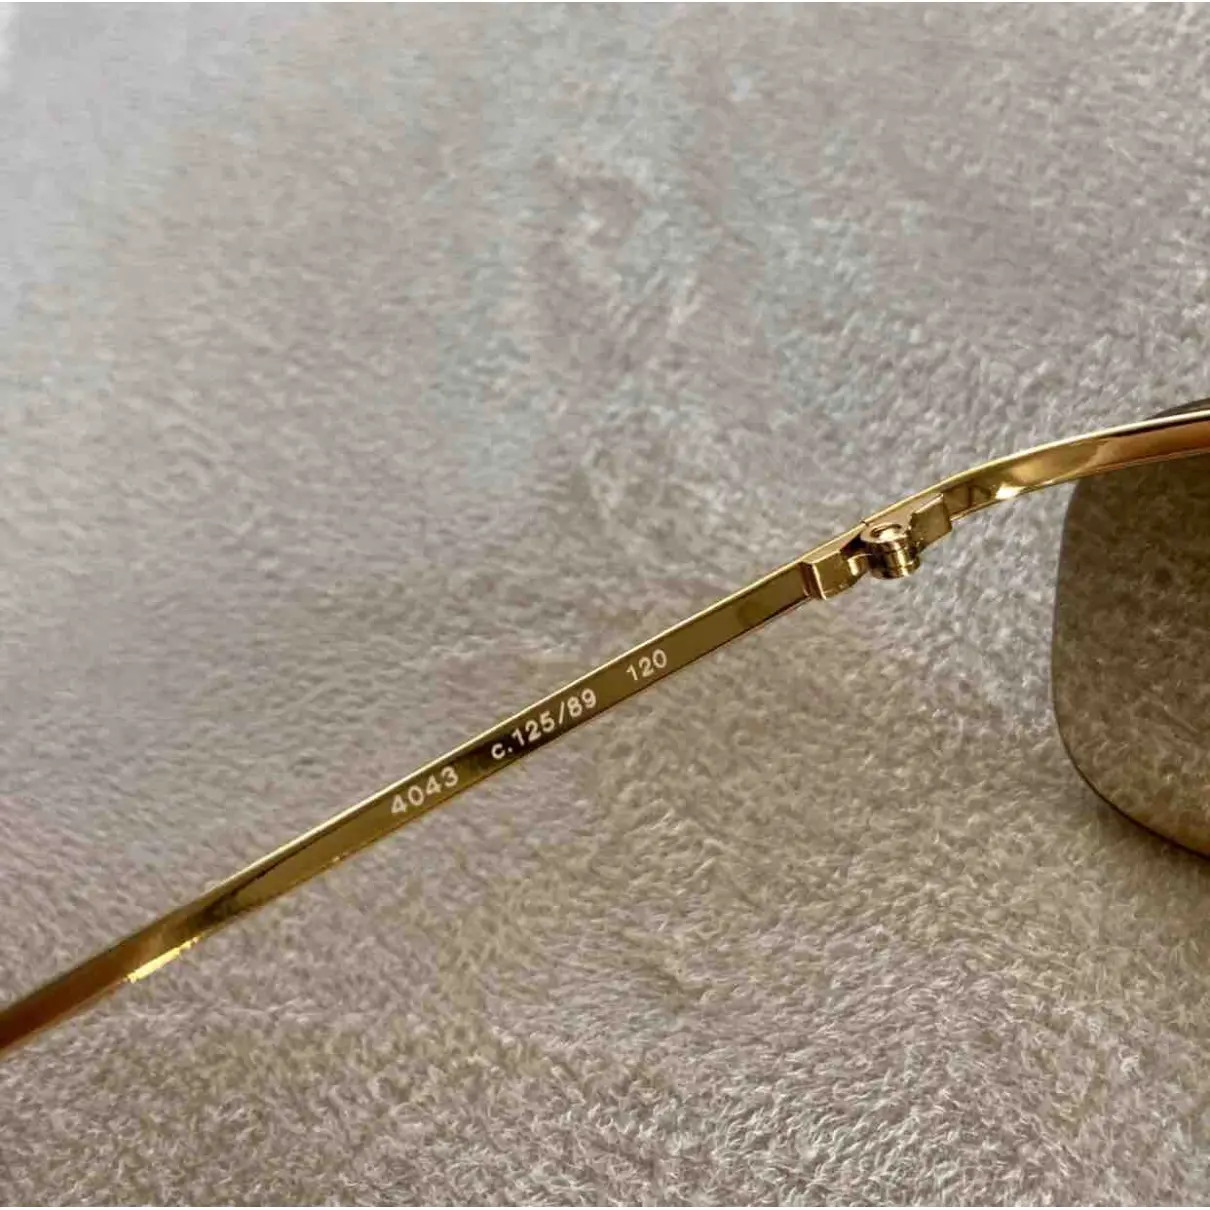 Aviator sunglasses Chanel - Vintage